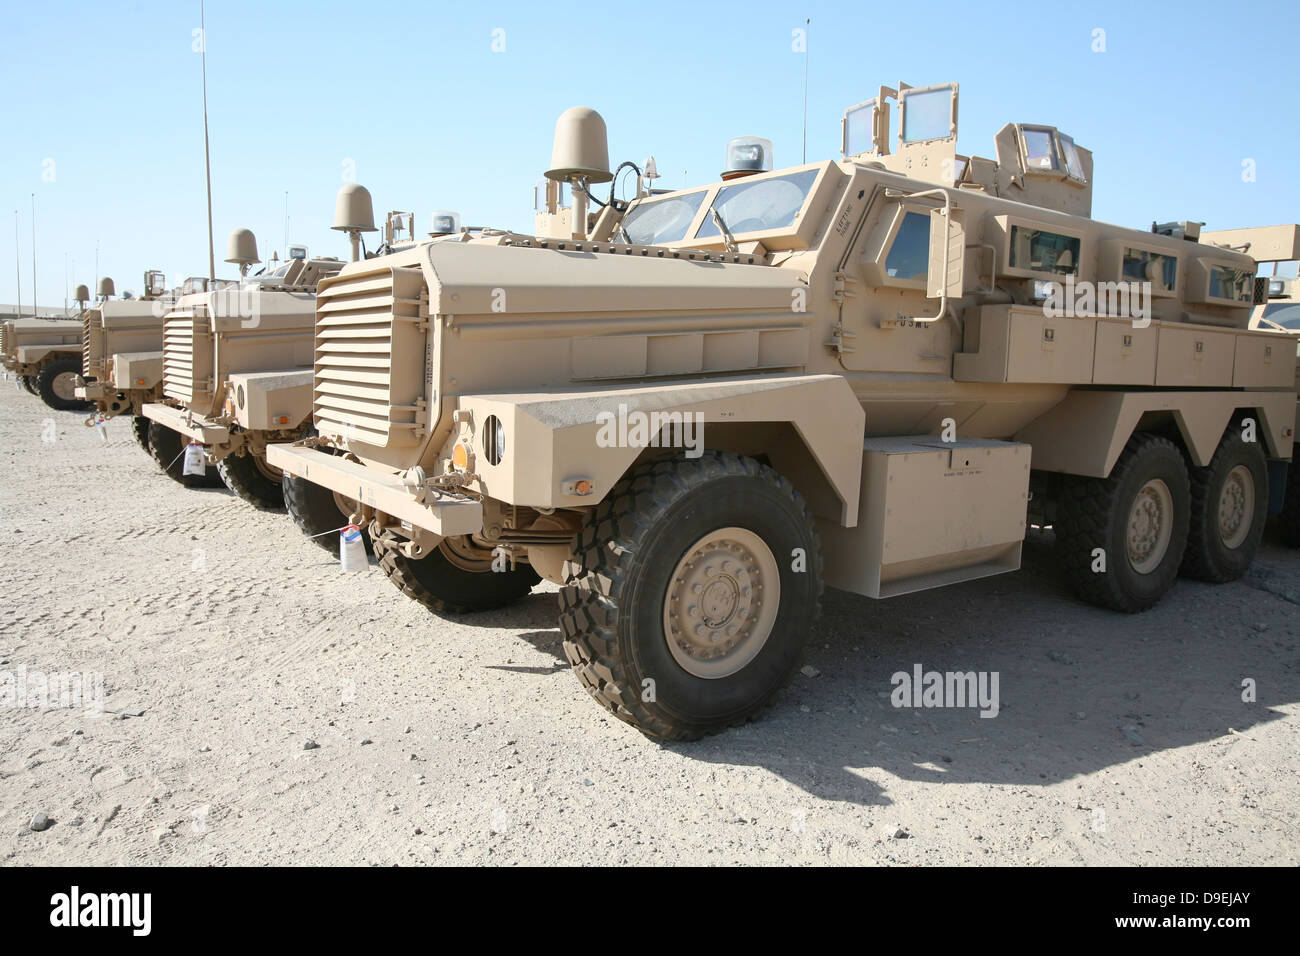 Cougar HEV Mine Resistant Ambush Protected vehicles. Stock Photo